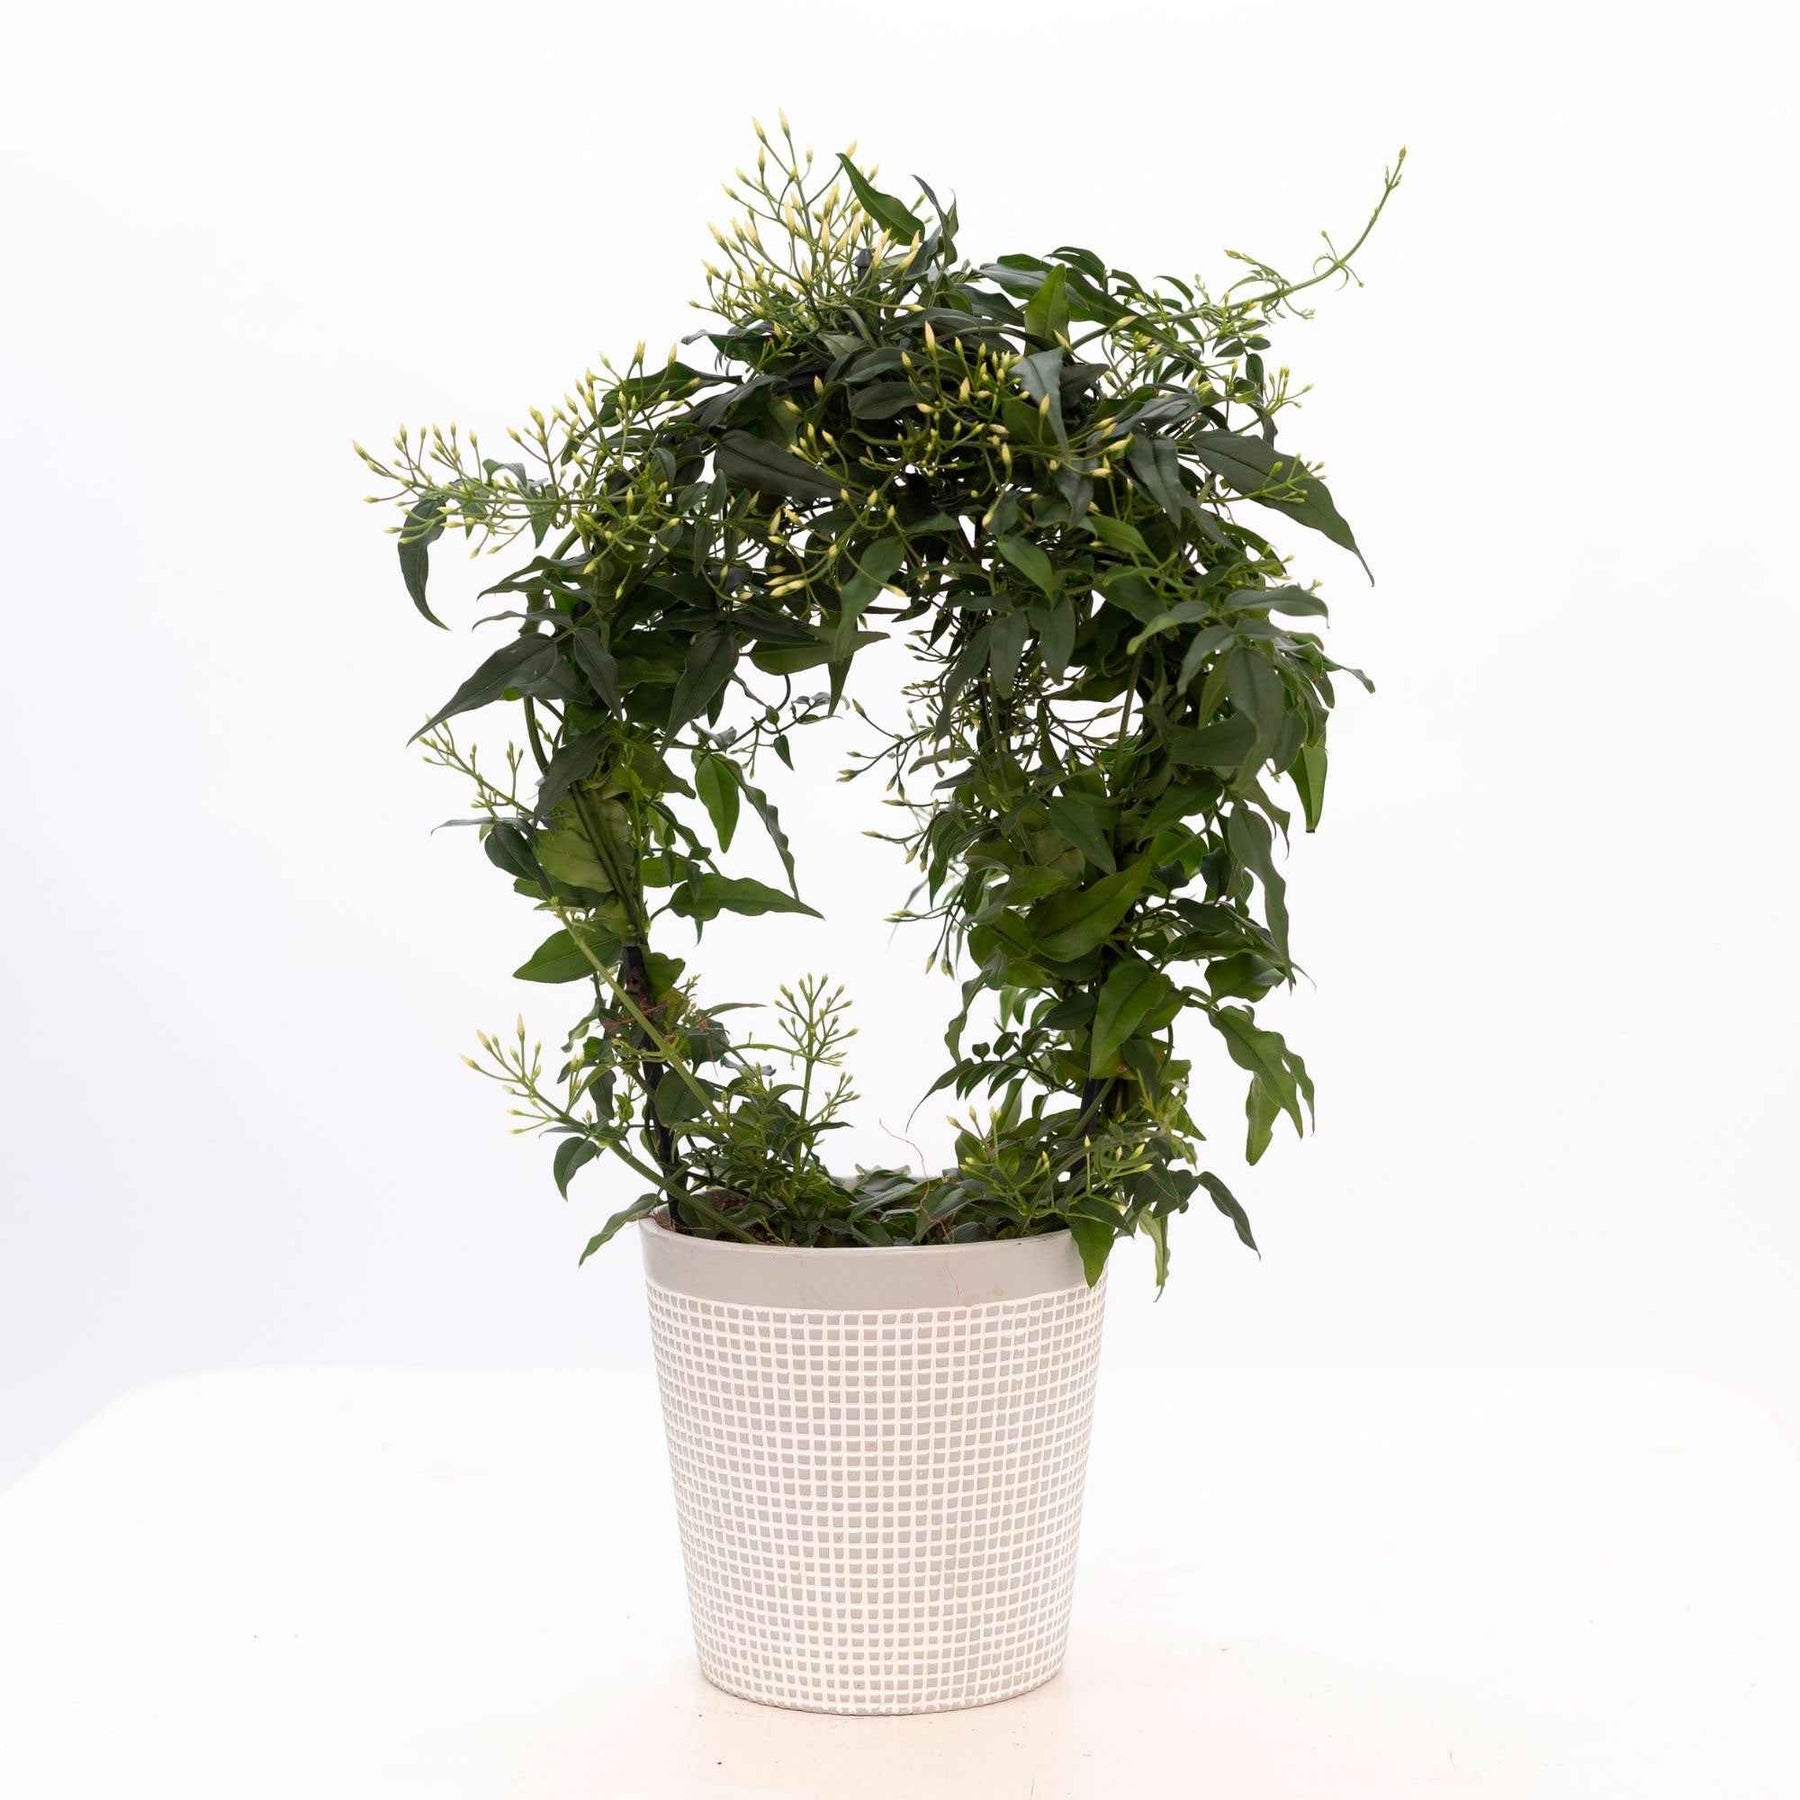 Jasmin blanc d'hiver - Jasminum polyanthum - Plantes grimpantes